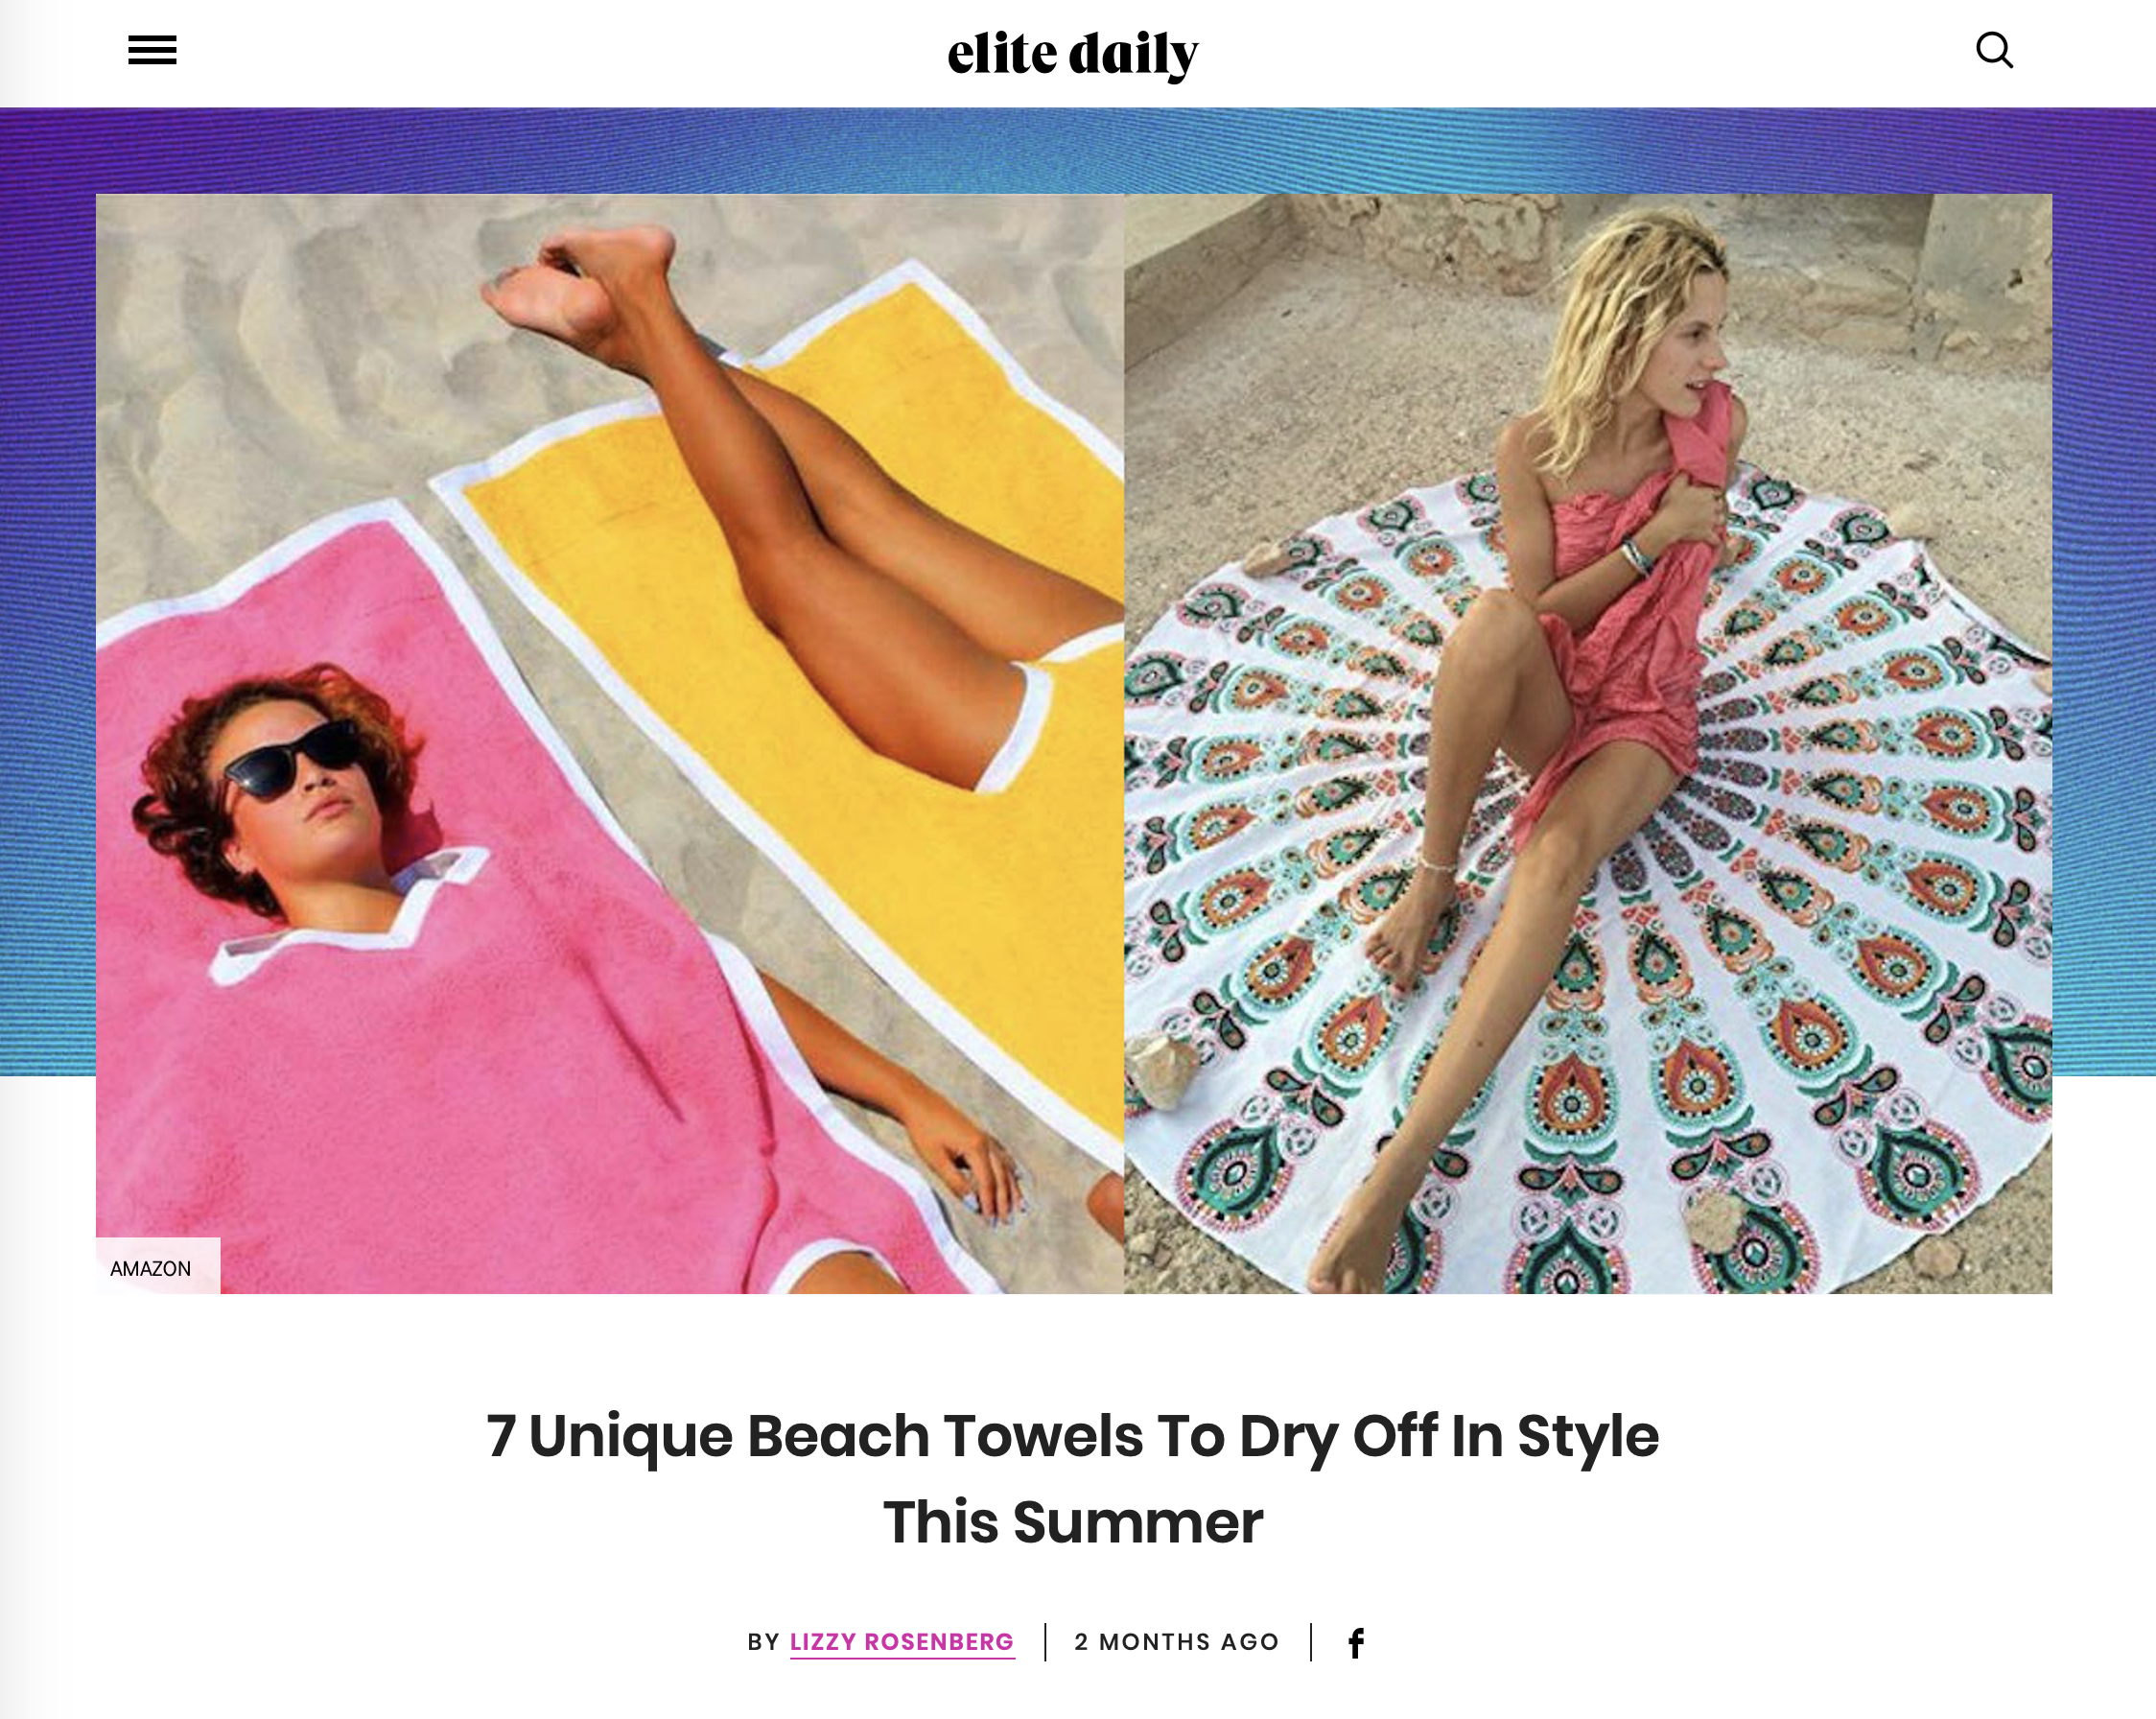 elite daily features mayde towel